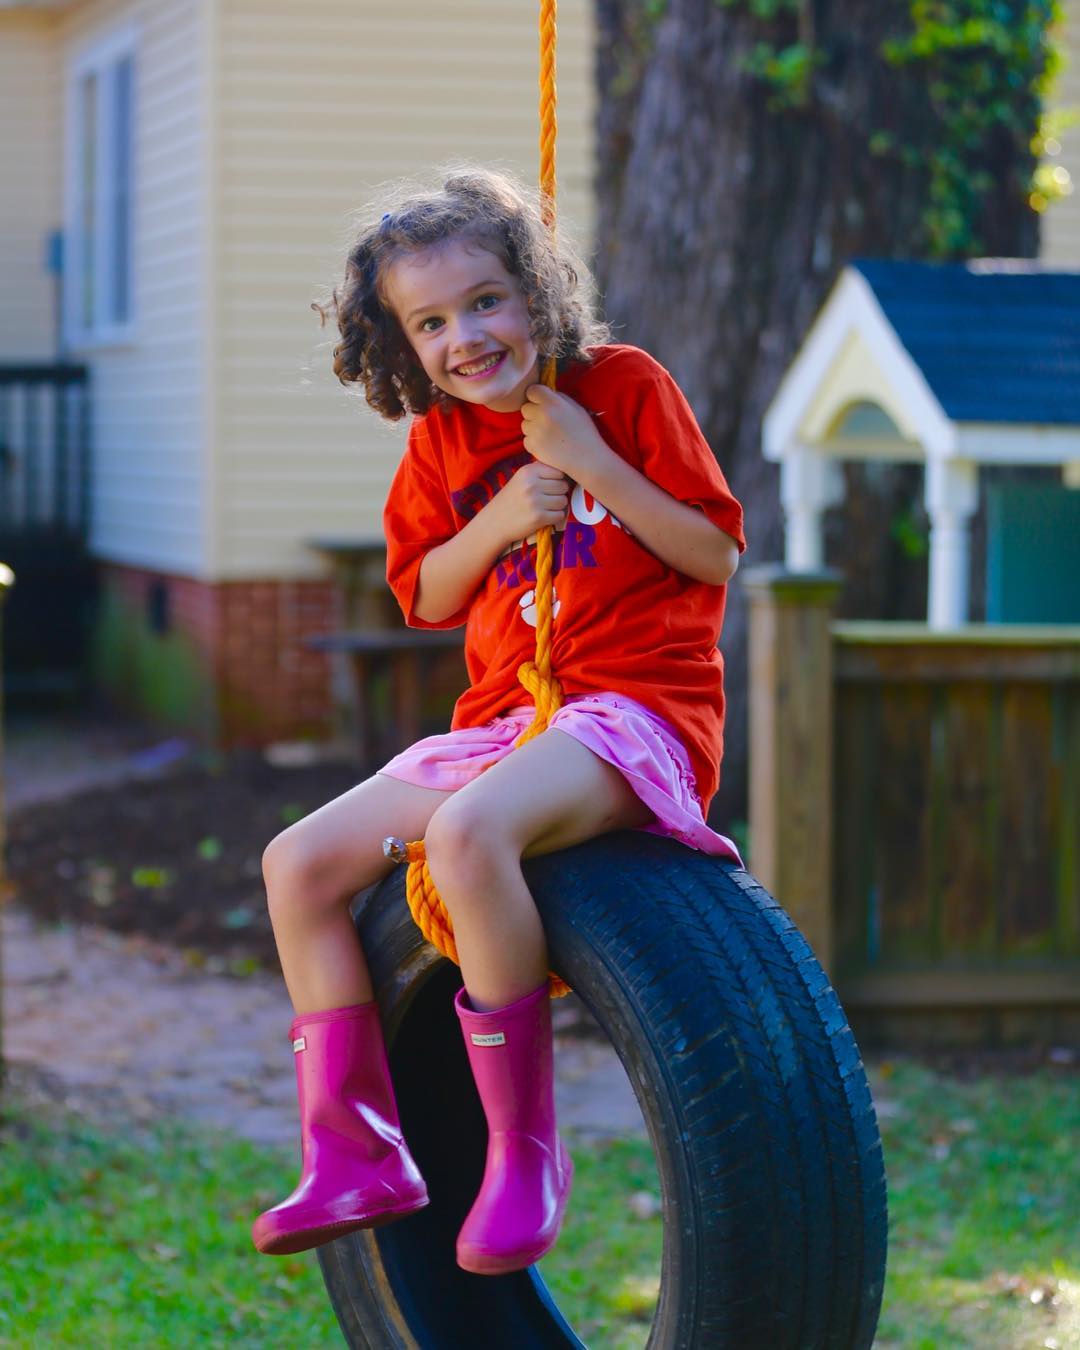 Yep…Rosebud loves her new tire swing! #daddyscore #camerapapa #canon #5dmkiii